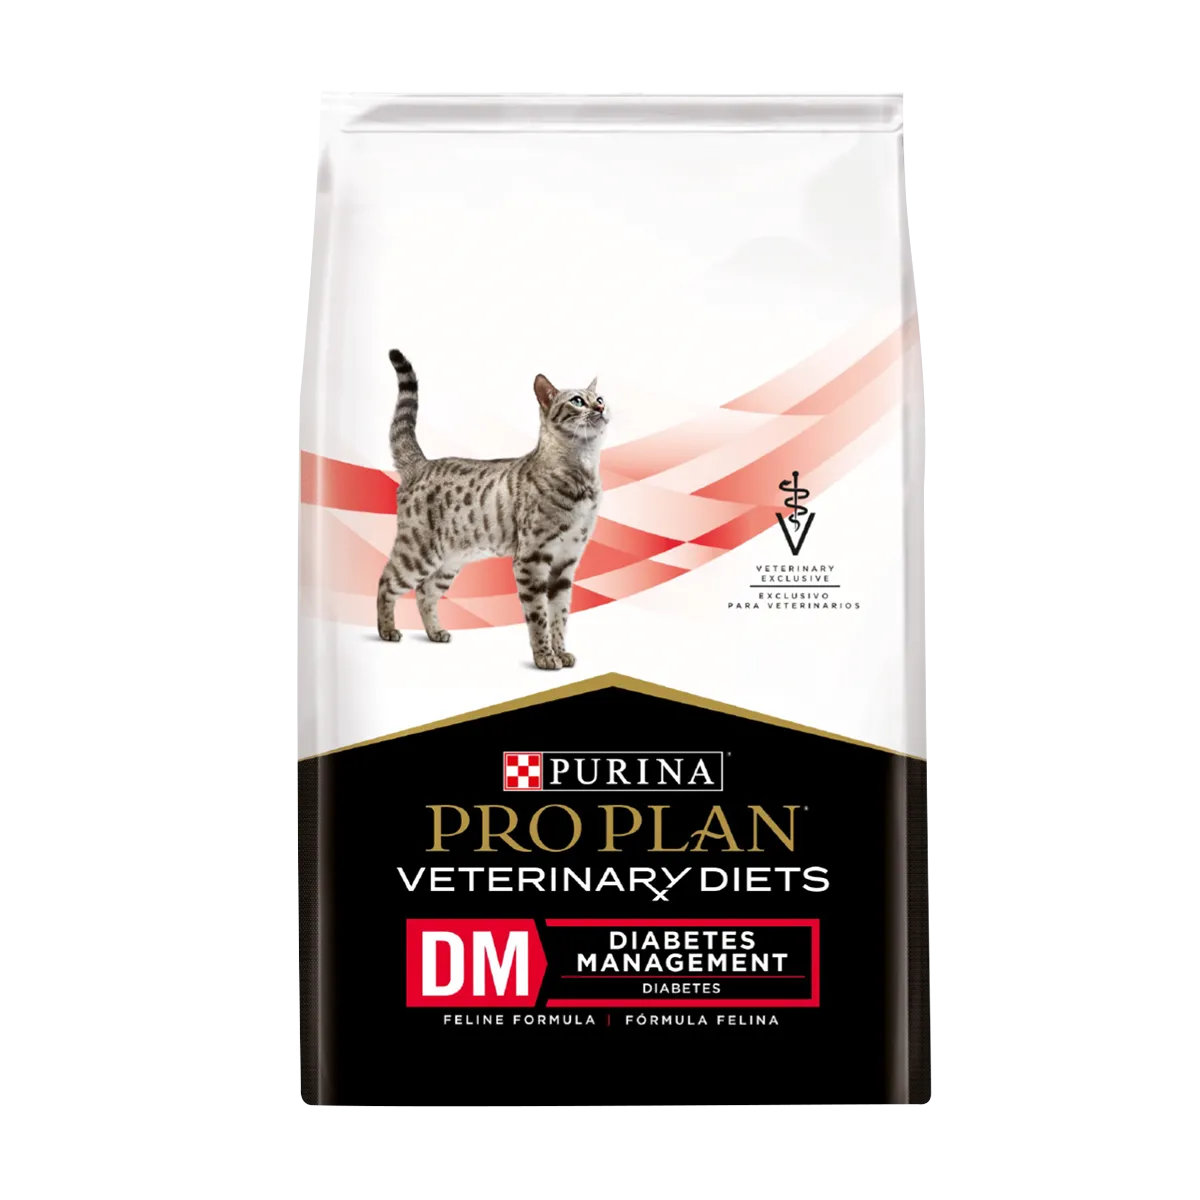 purina-pro-plan-veterinay-diets-cat-dm-diabets-managment